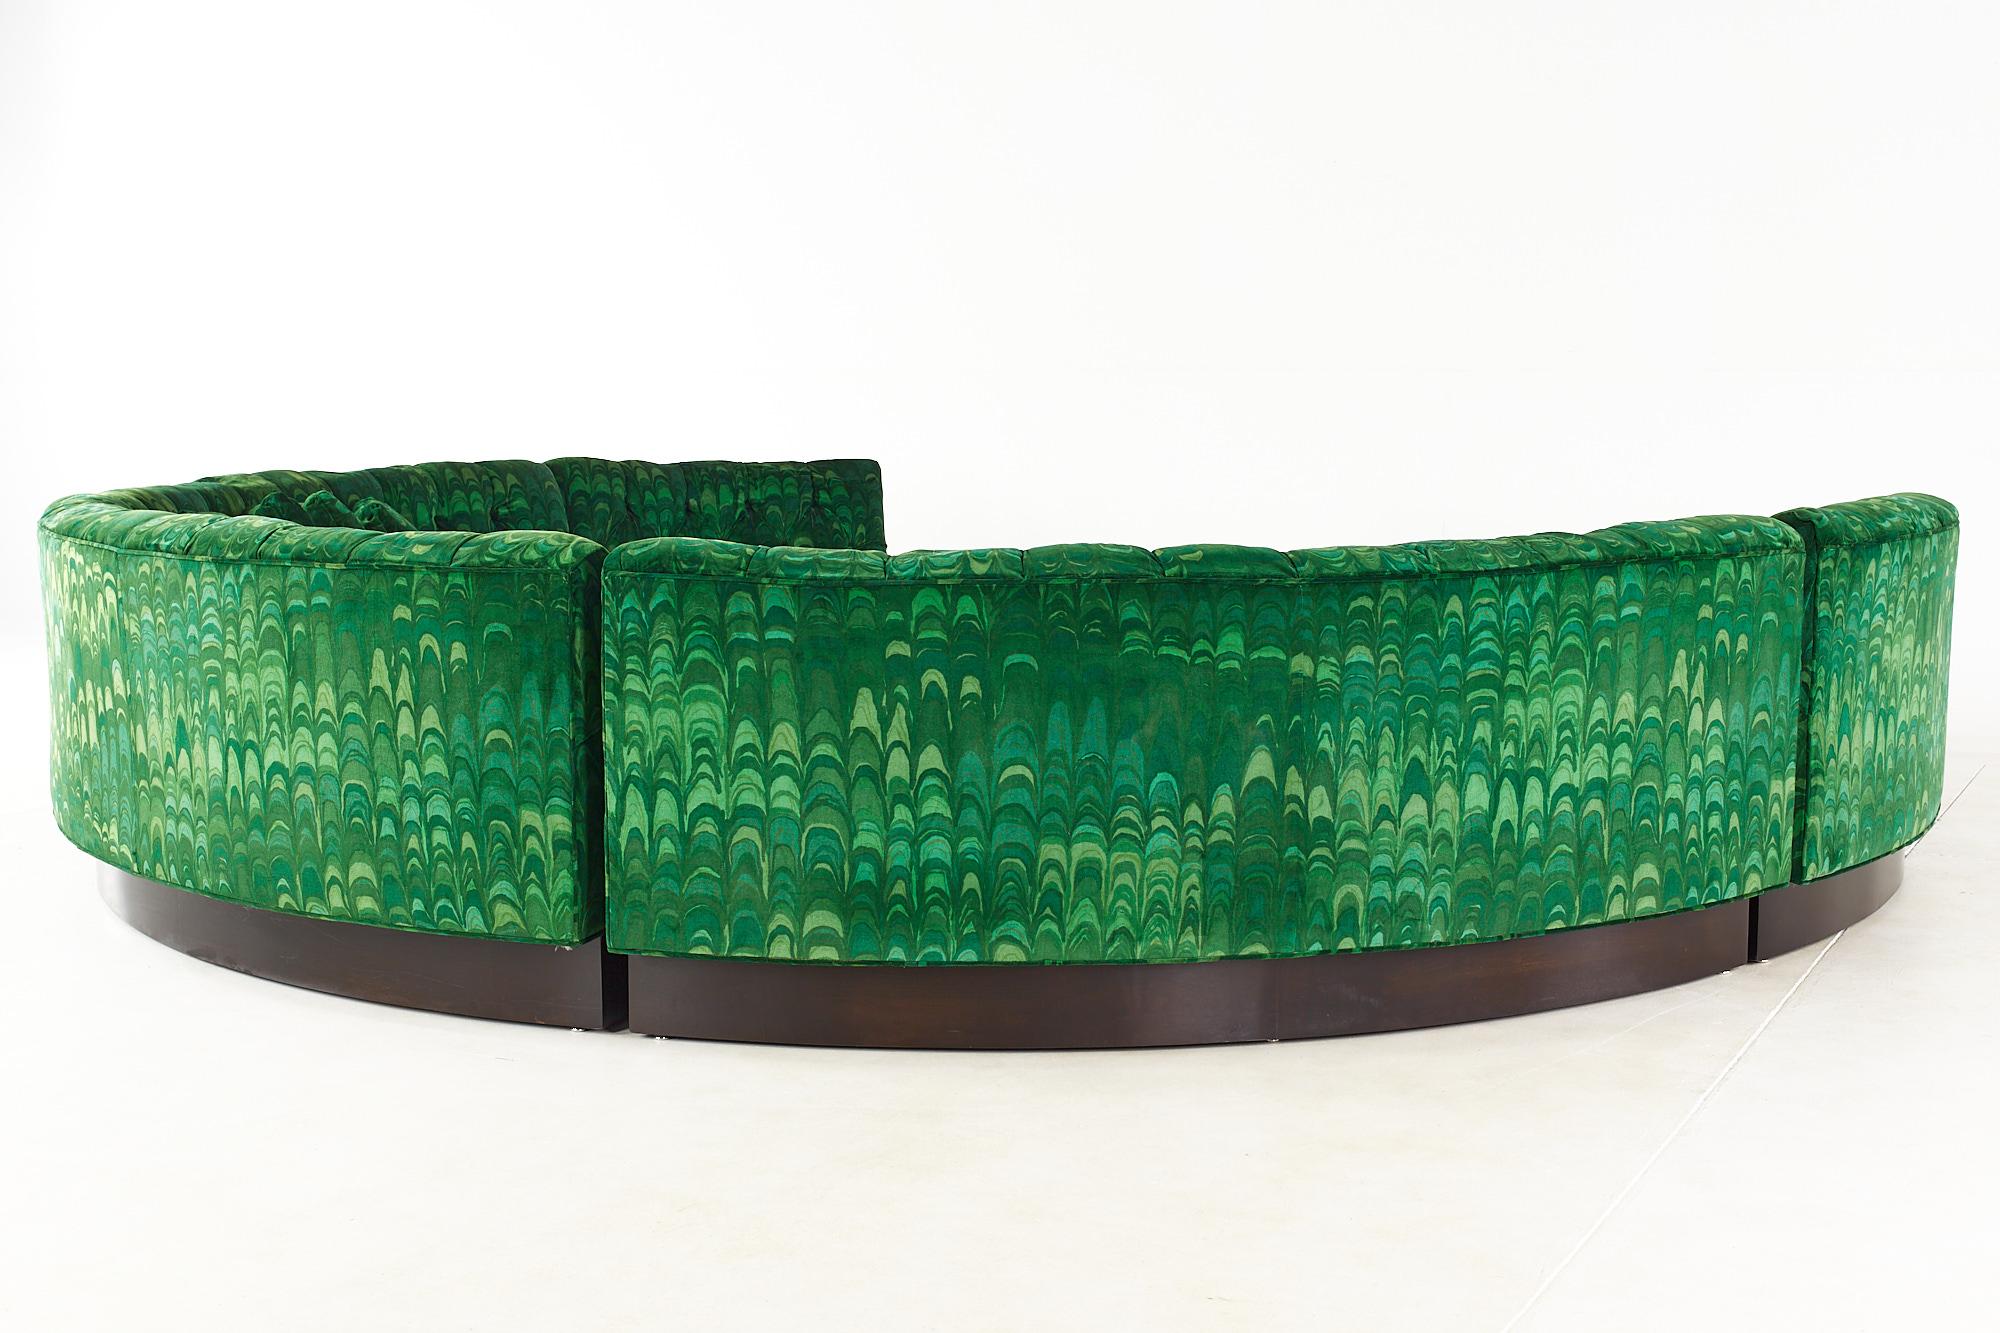 Upholstery Erwin Lambeth MCM Circular Sectional Pit Sofa Original Jack Lenor Larsen Fabric For Sale